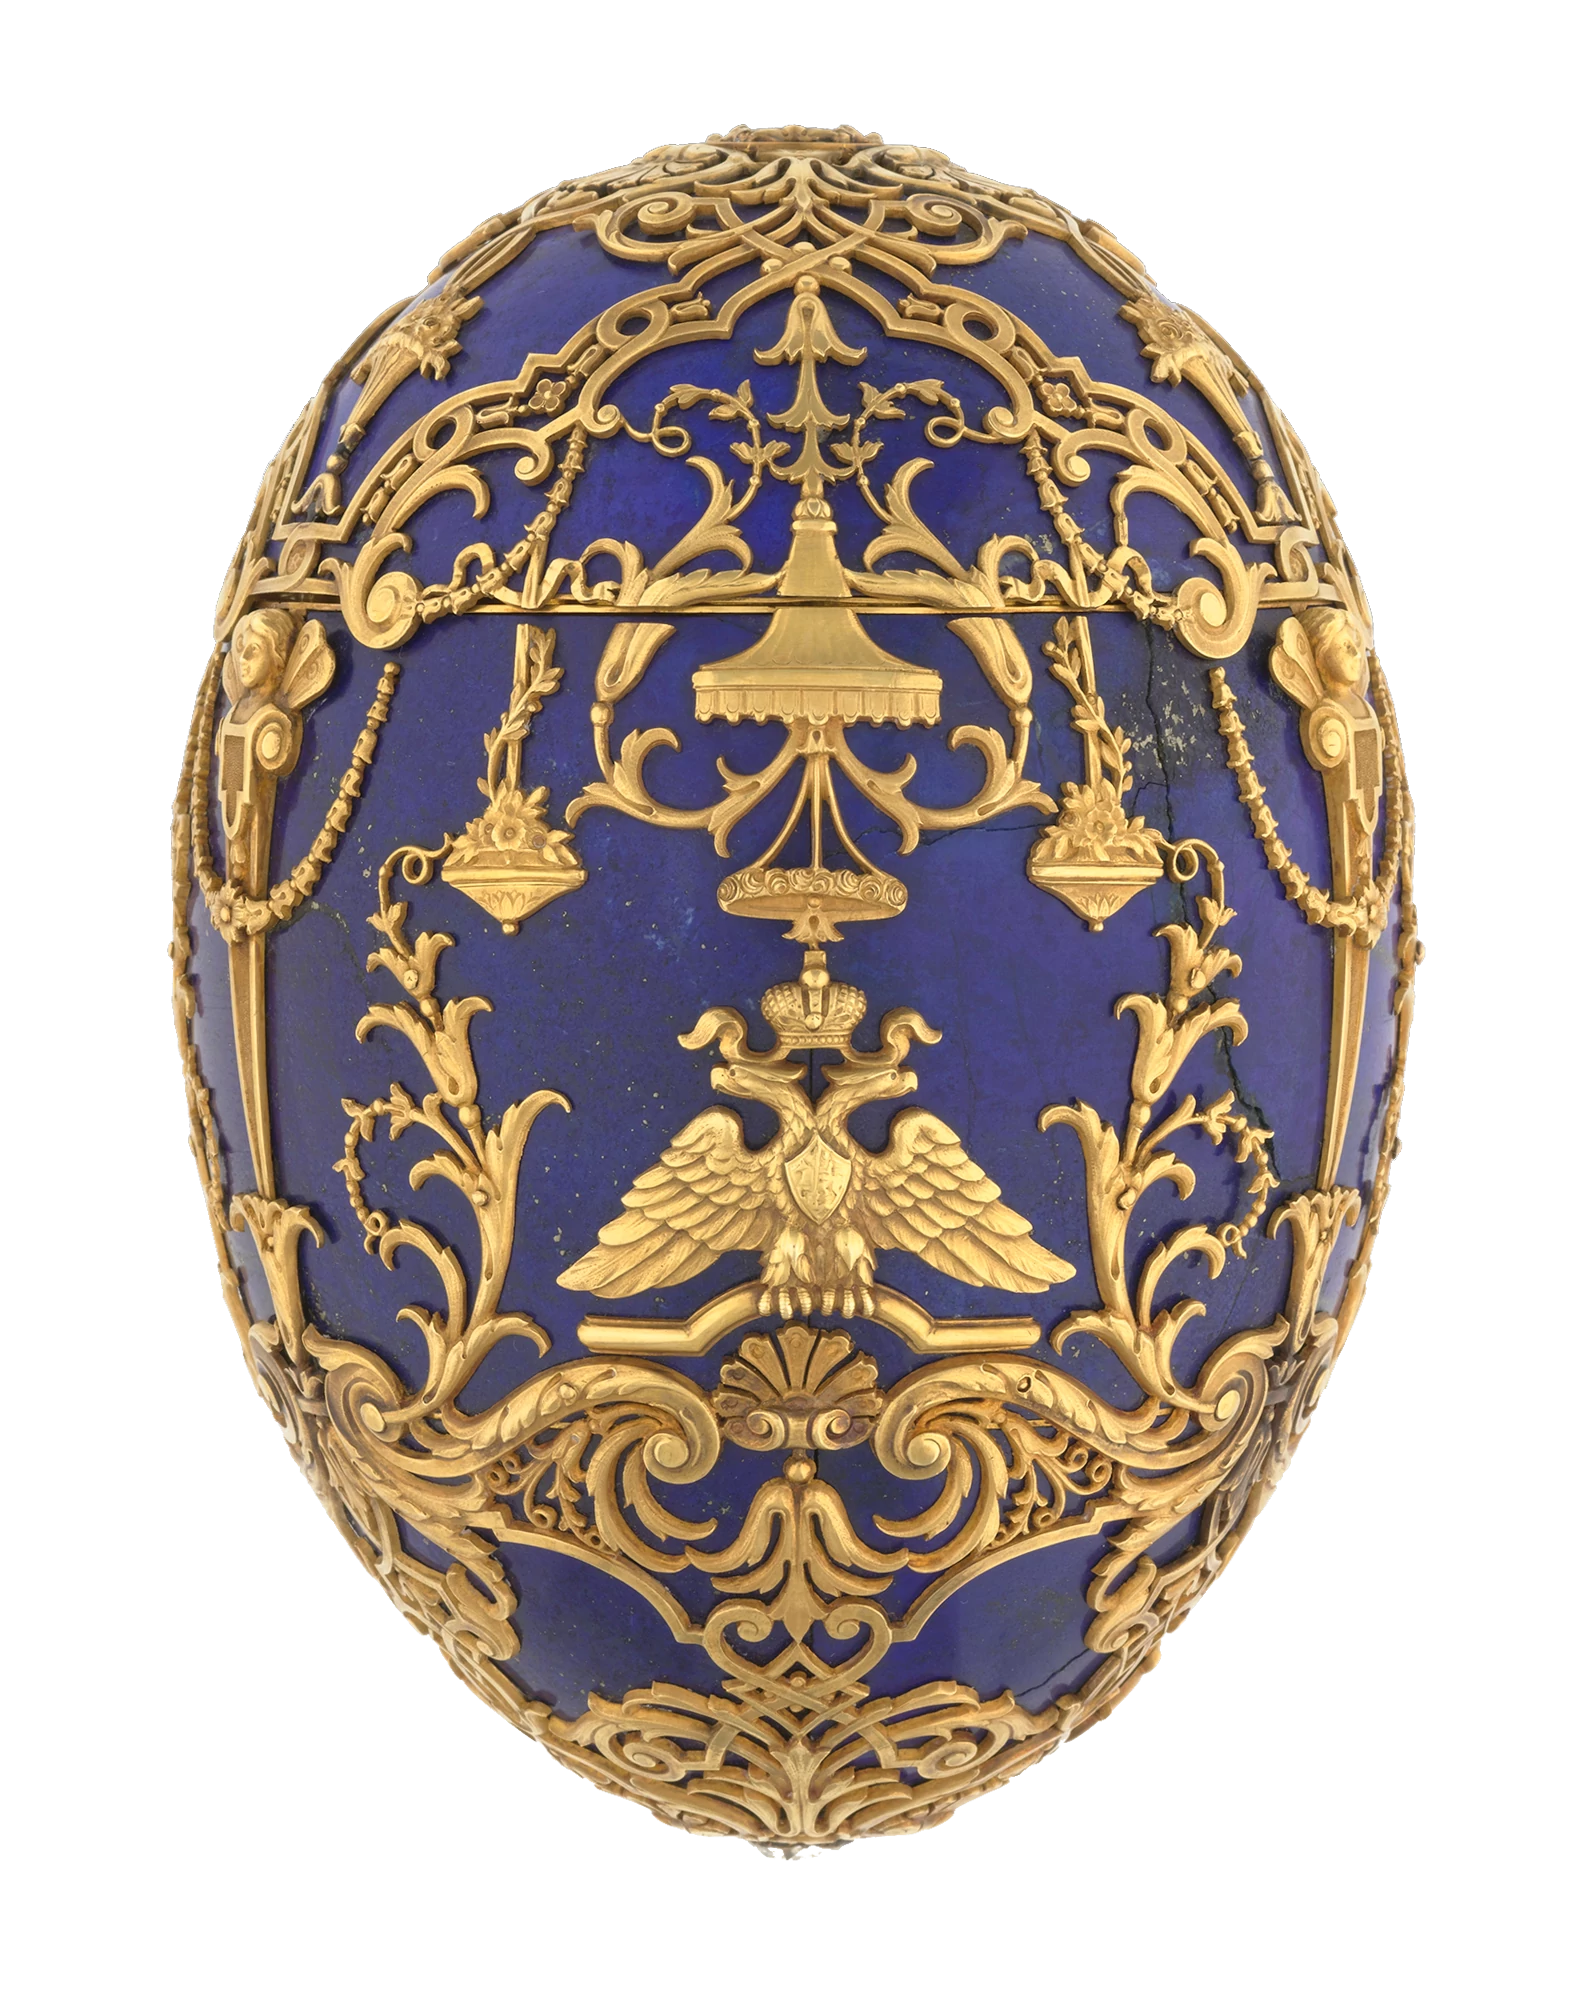 Tsesarevich Egg, Peter Carl Fabergé